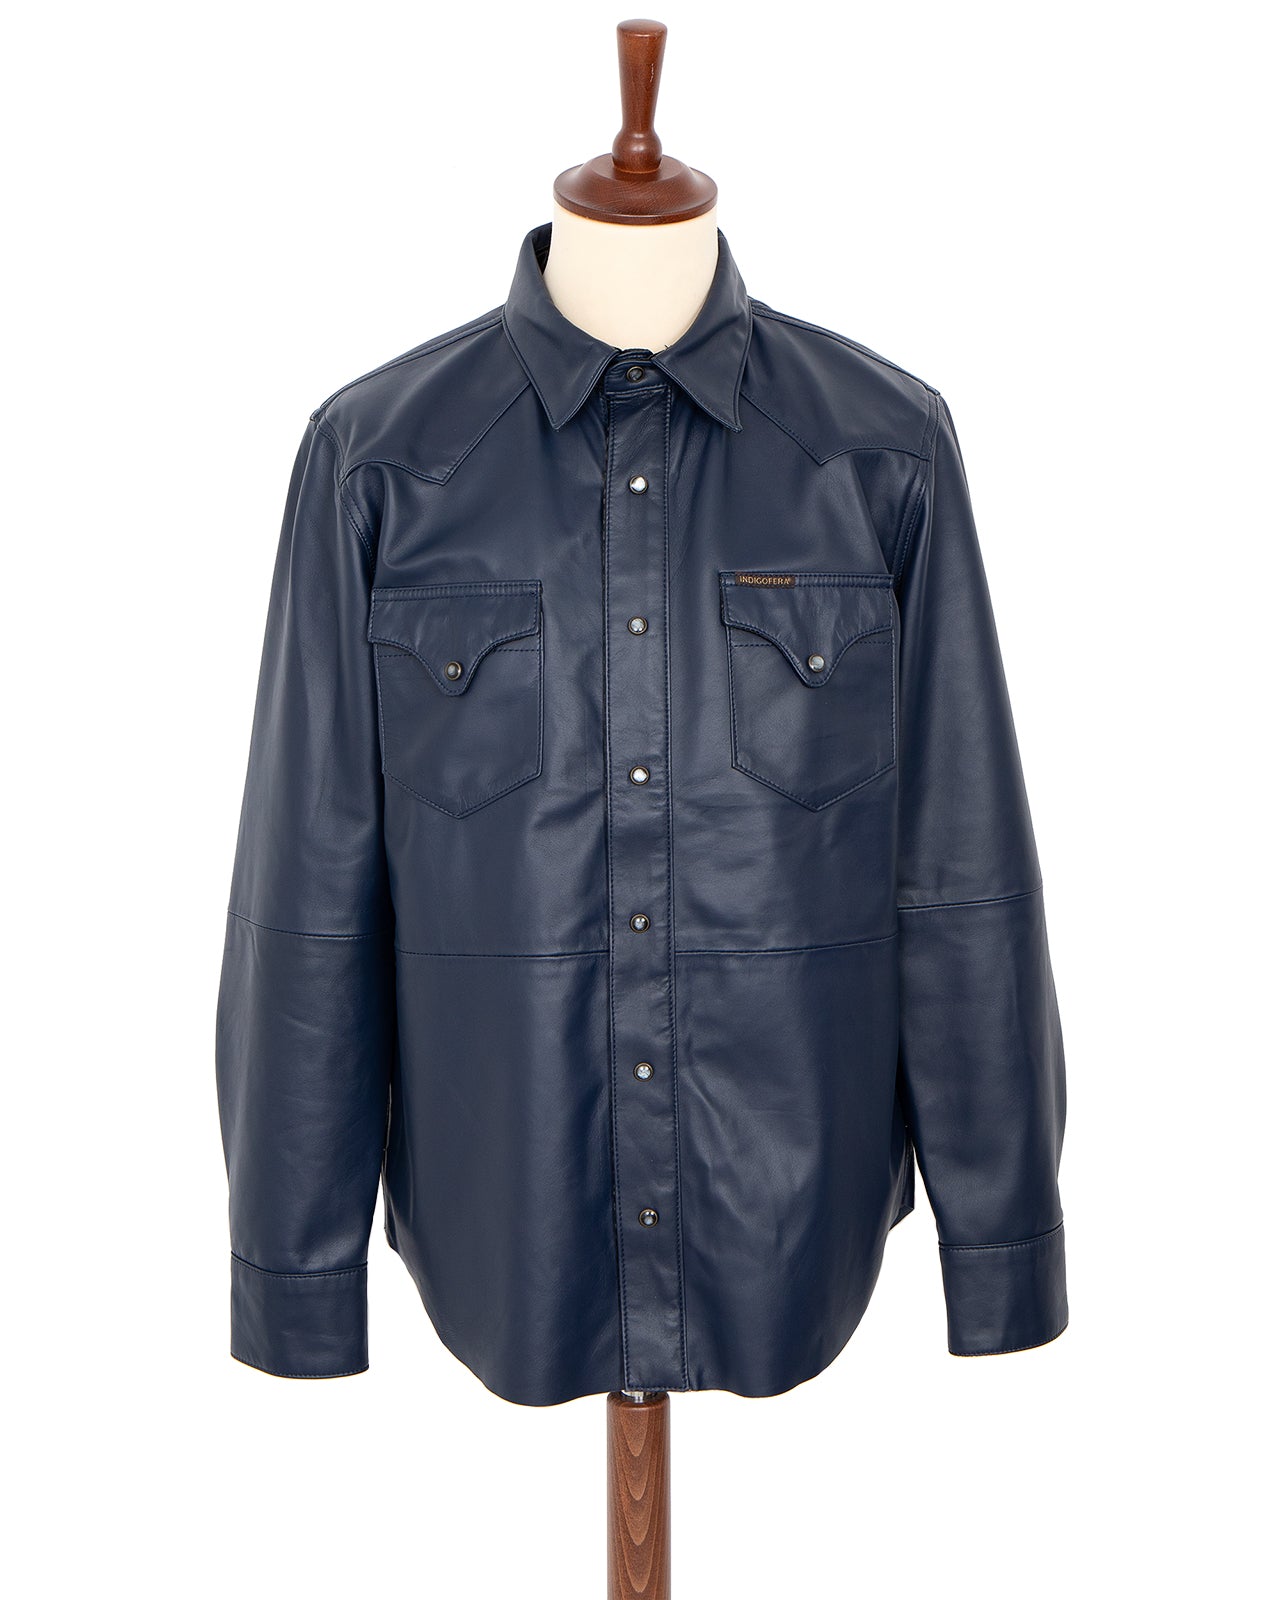 Indigofera Hawley Leather Shirt, Navy